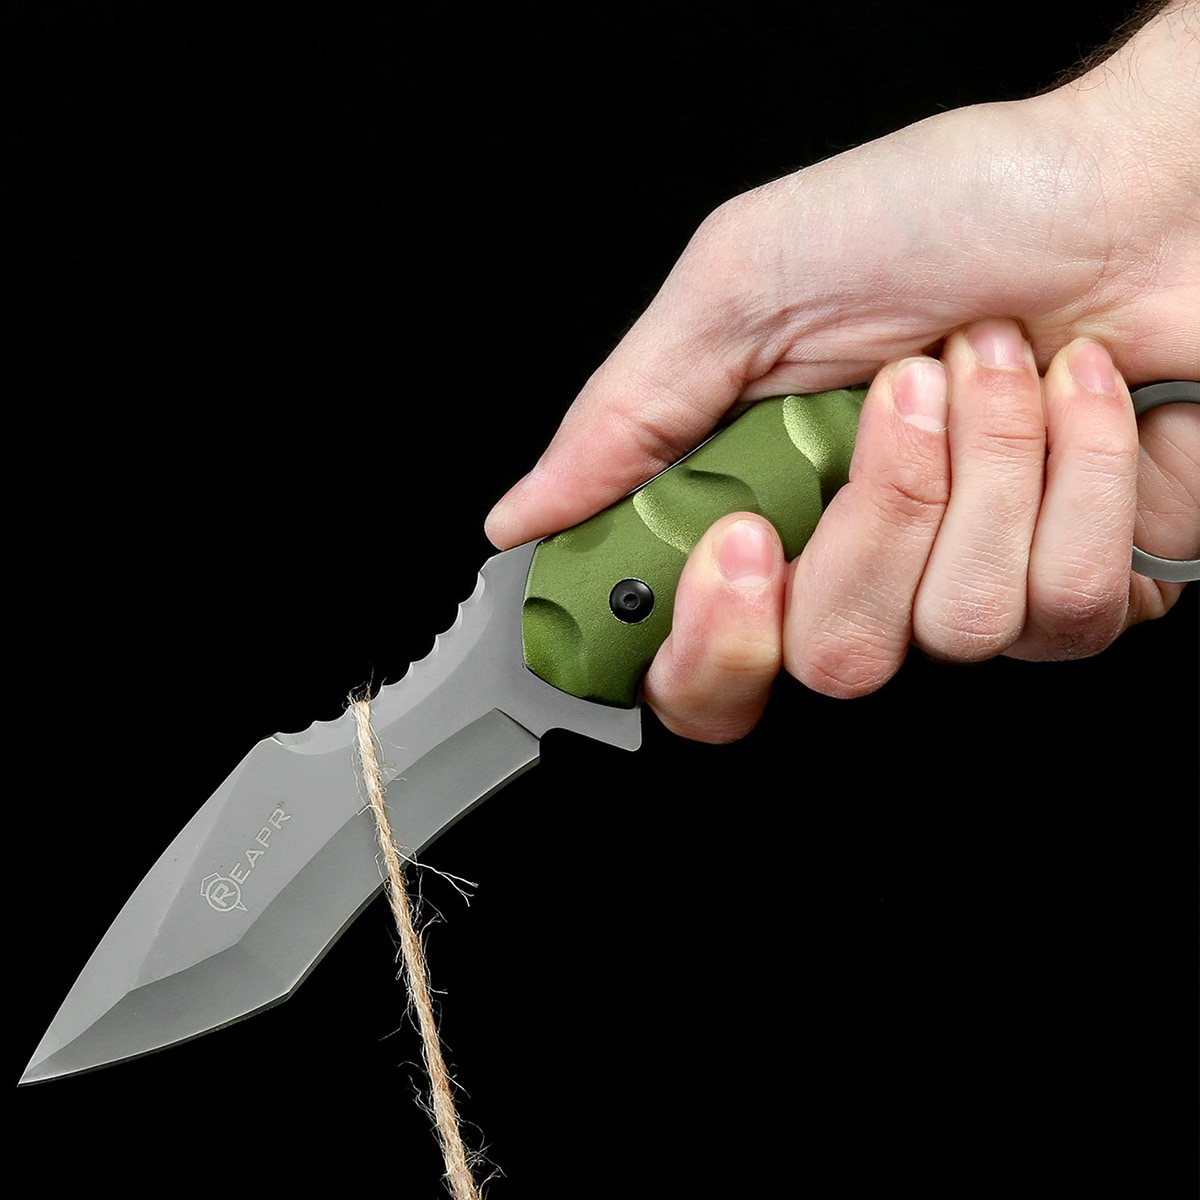 Nóż Reapr Slamr Fixed Blade Knife